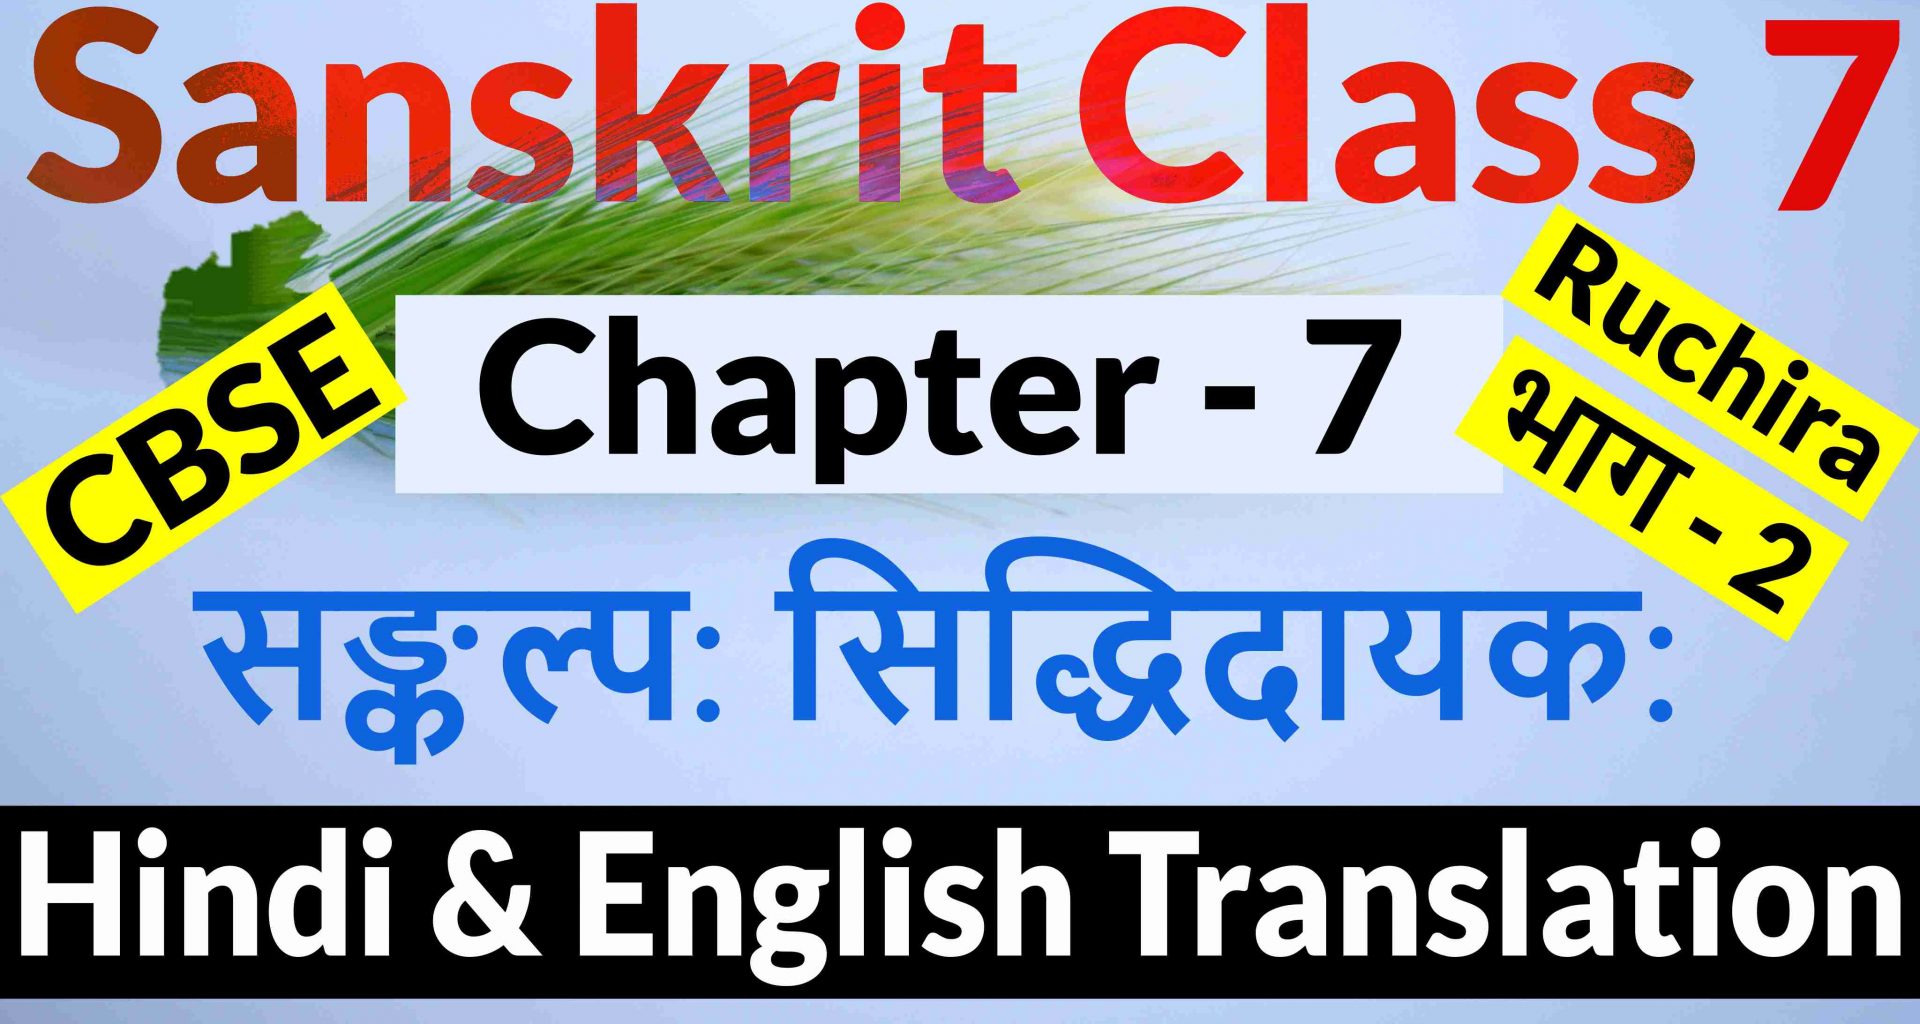 Class 7 Sanskrit Chapter 7 - सङ्कल्प: सिद्धिदायक:- Hindi Translation & English Translation